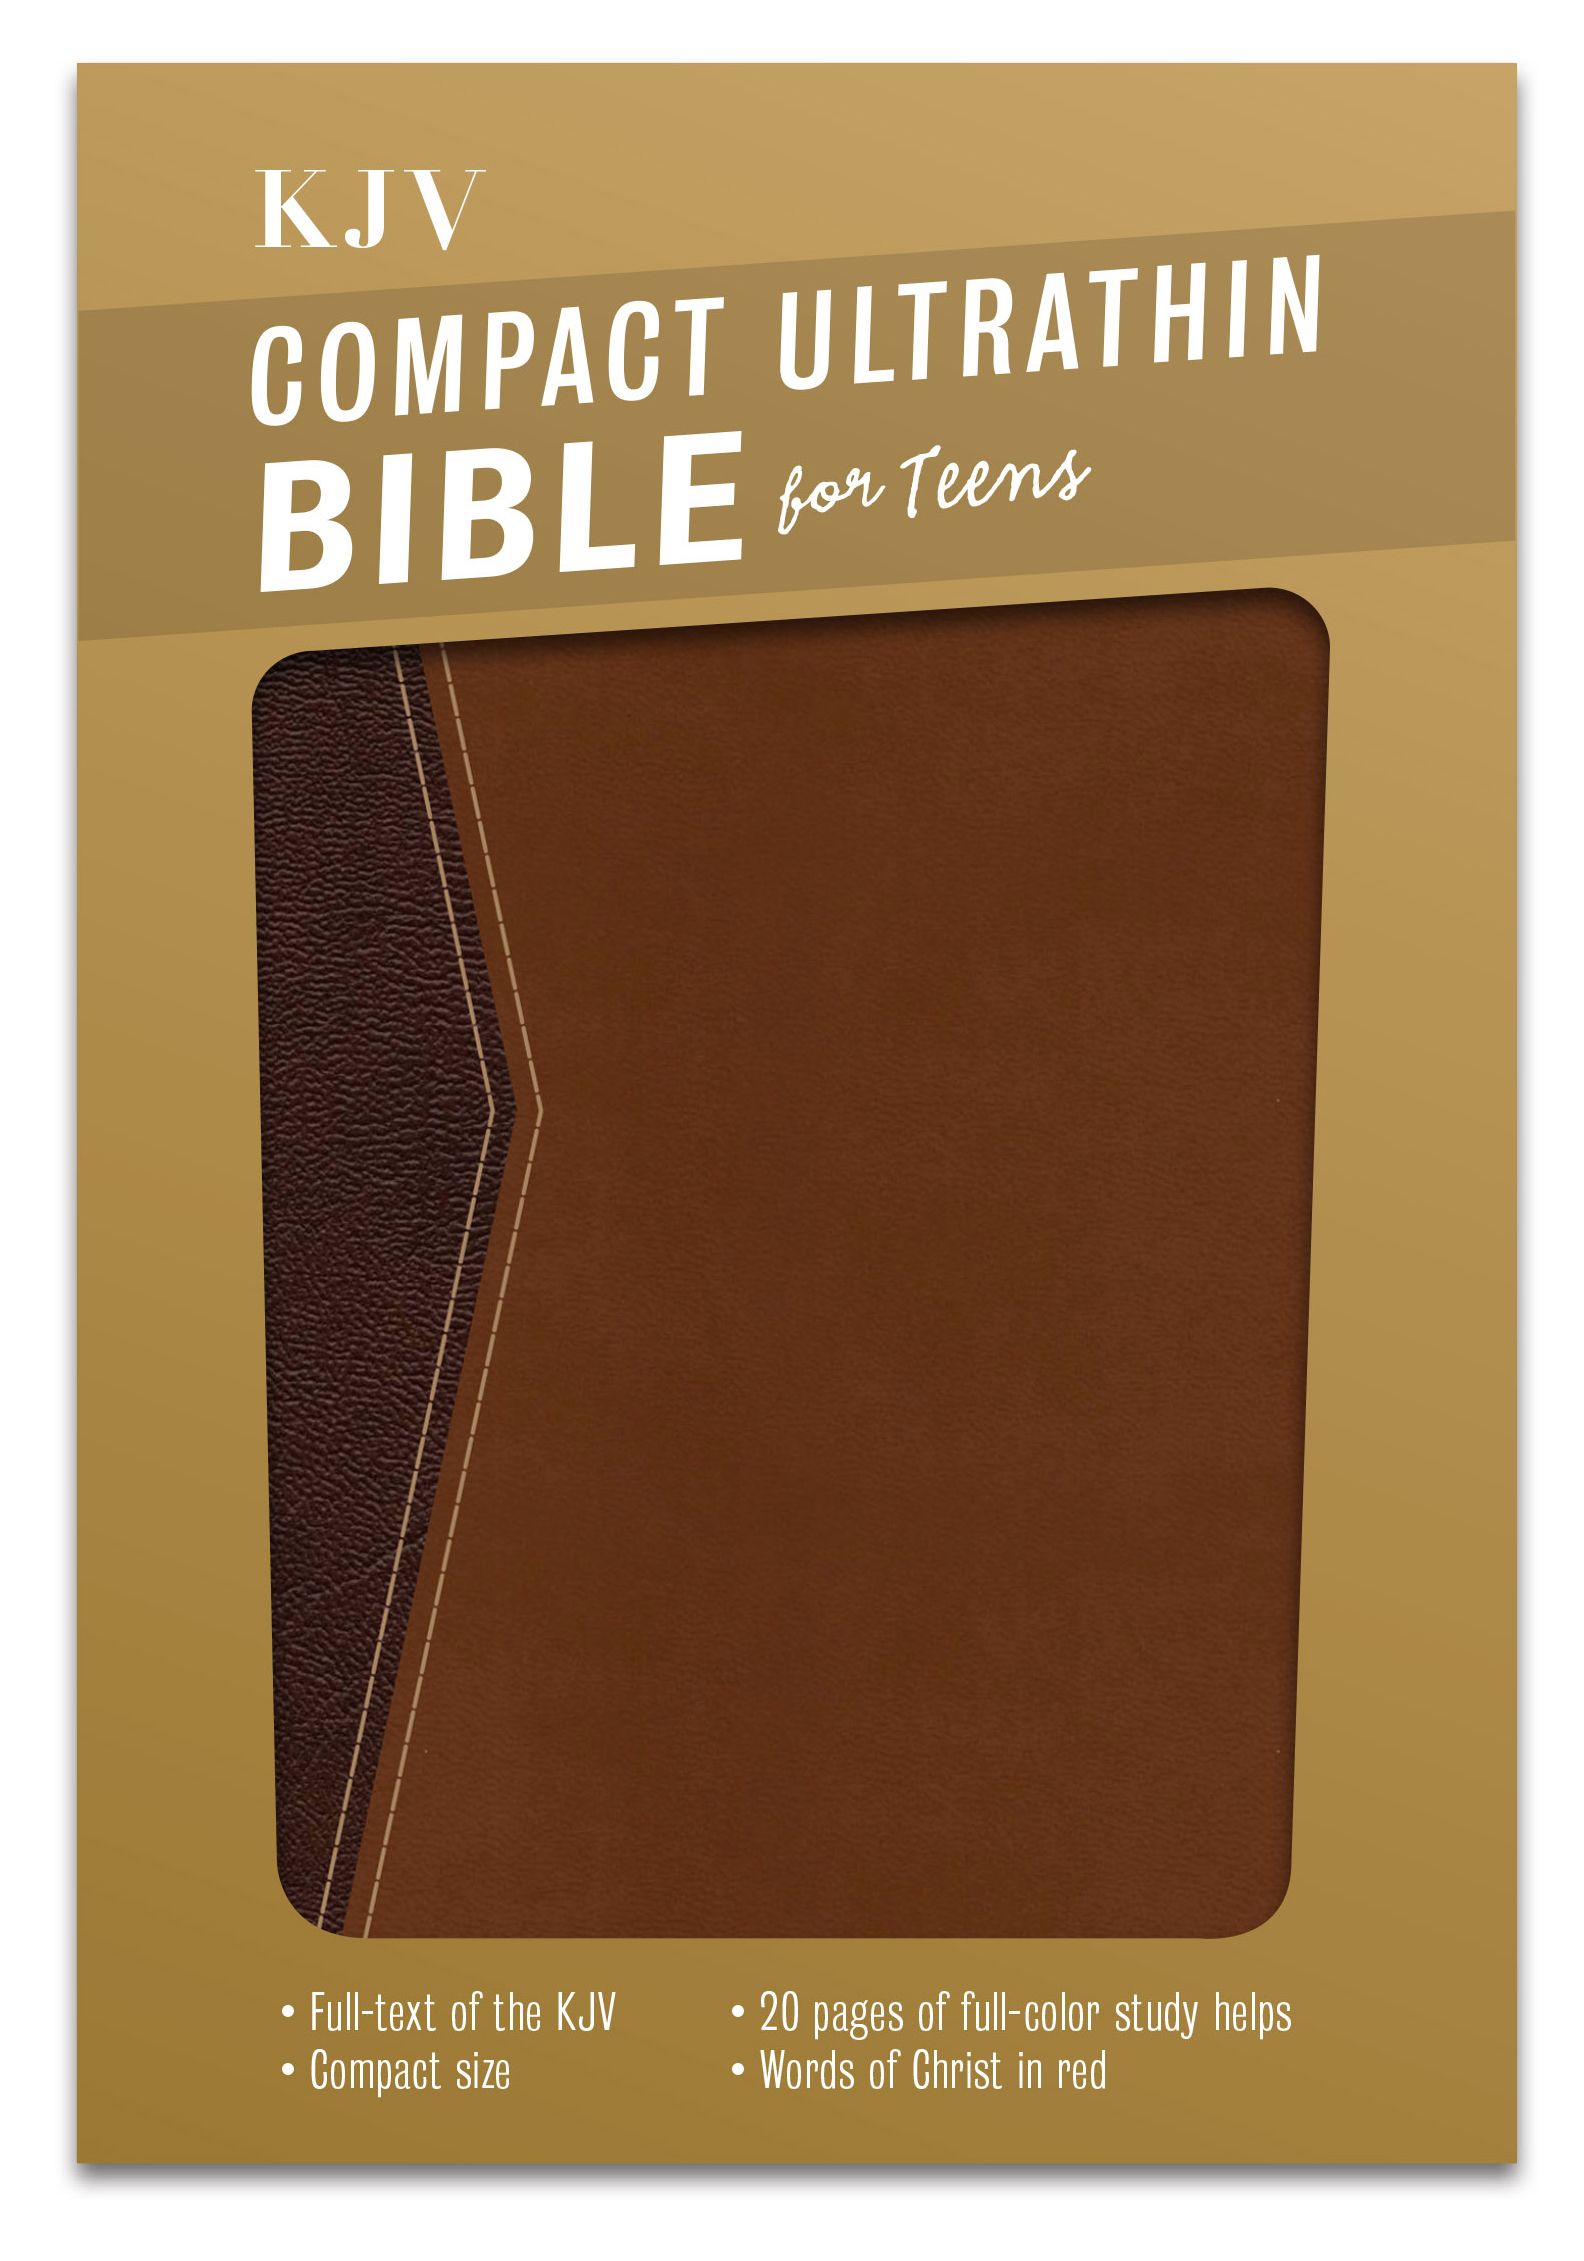 KJV Compact Ultrathin Bible for Teens, Walnut LeatherTouch